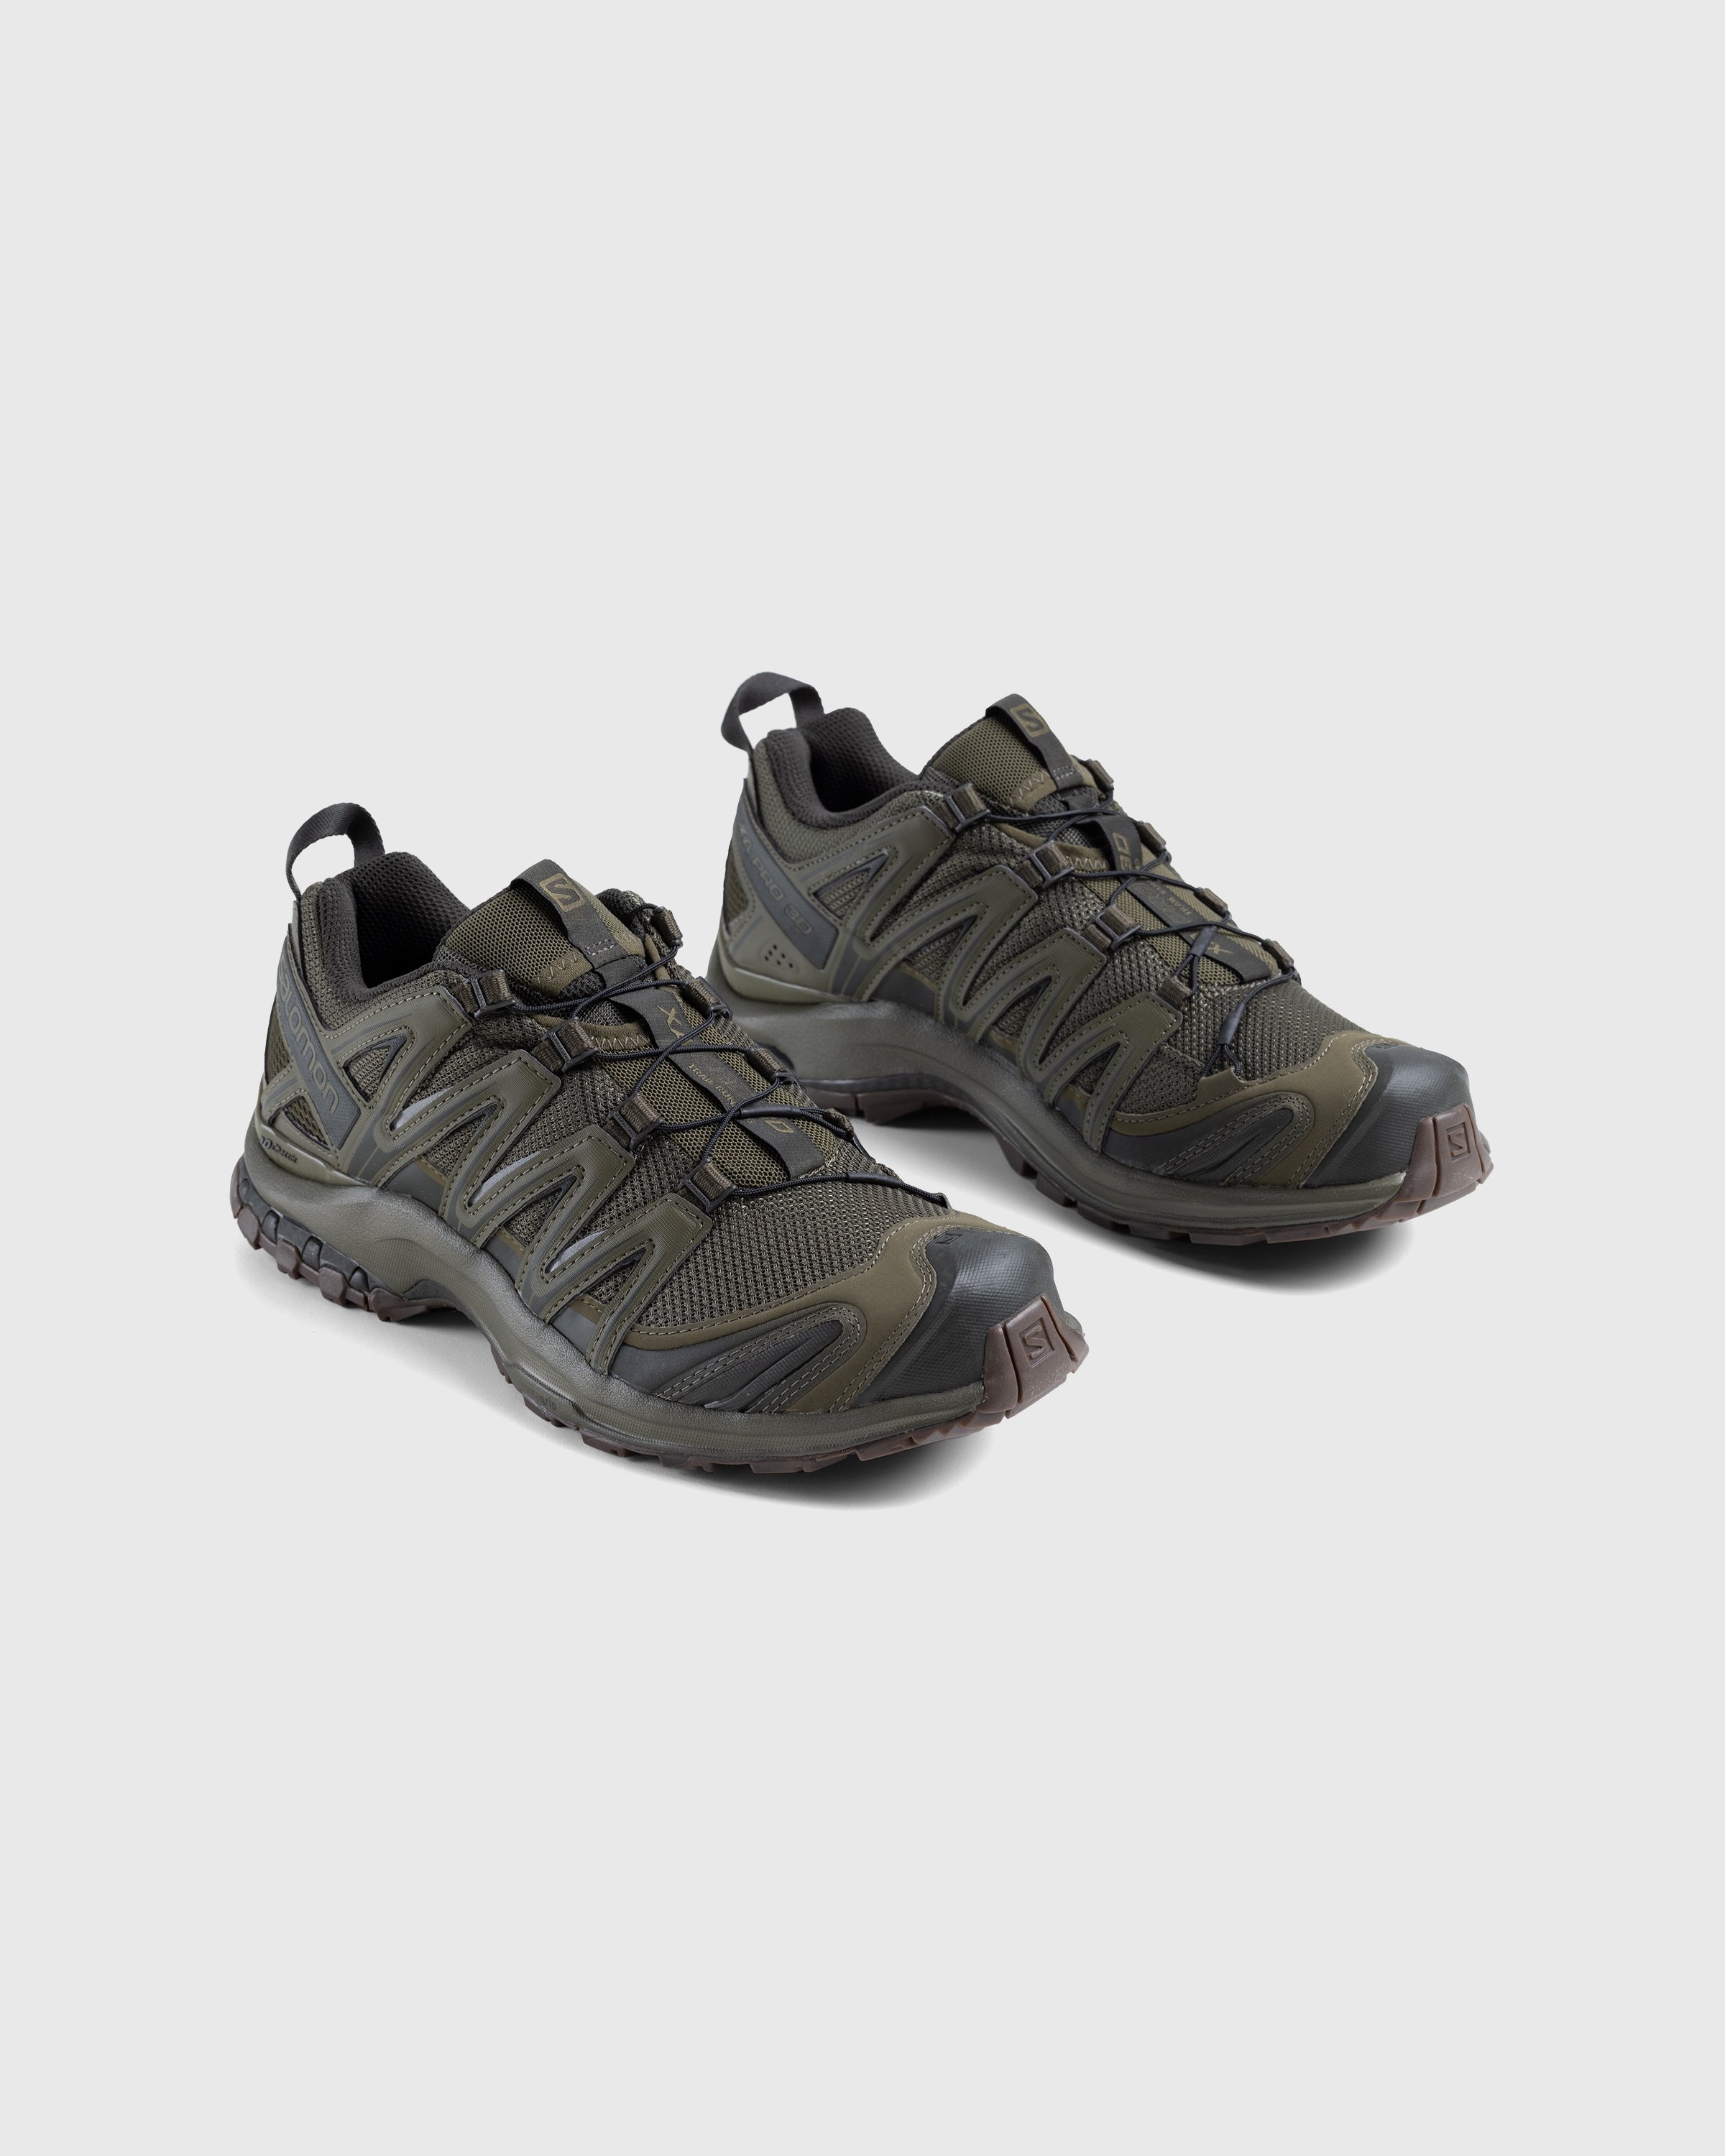 Salomon – XA Pro 3D Olive Night/Peat - Sneakers - Black - Image 3